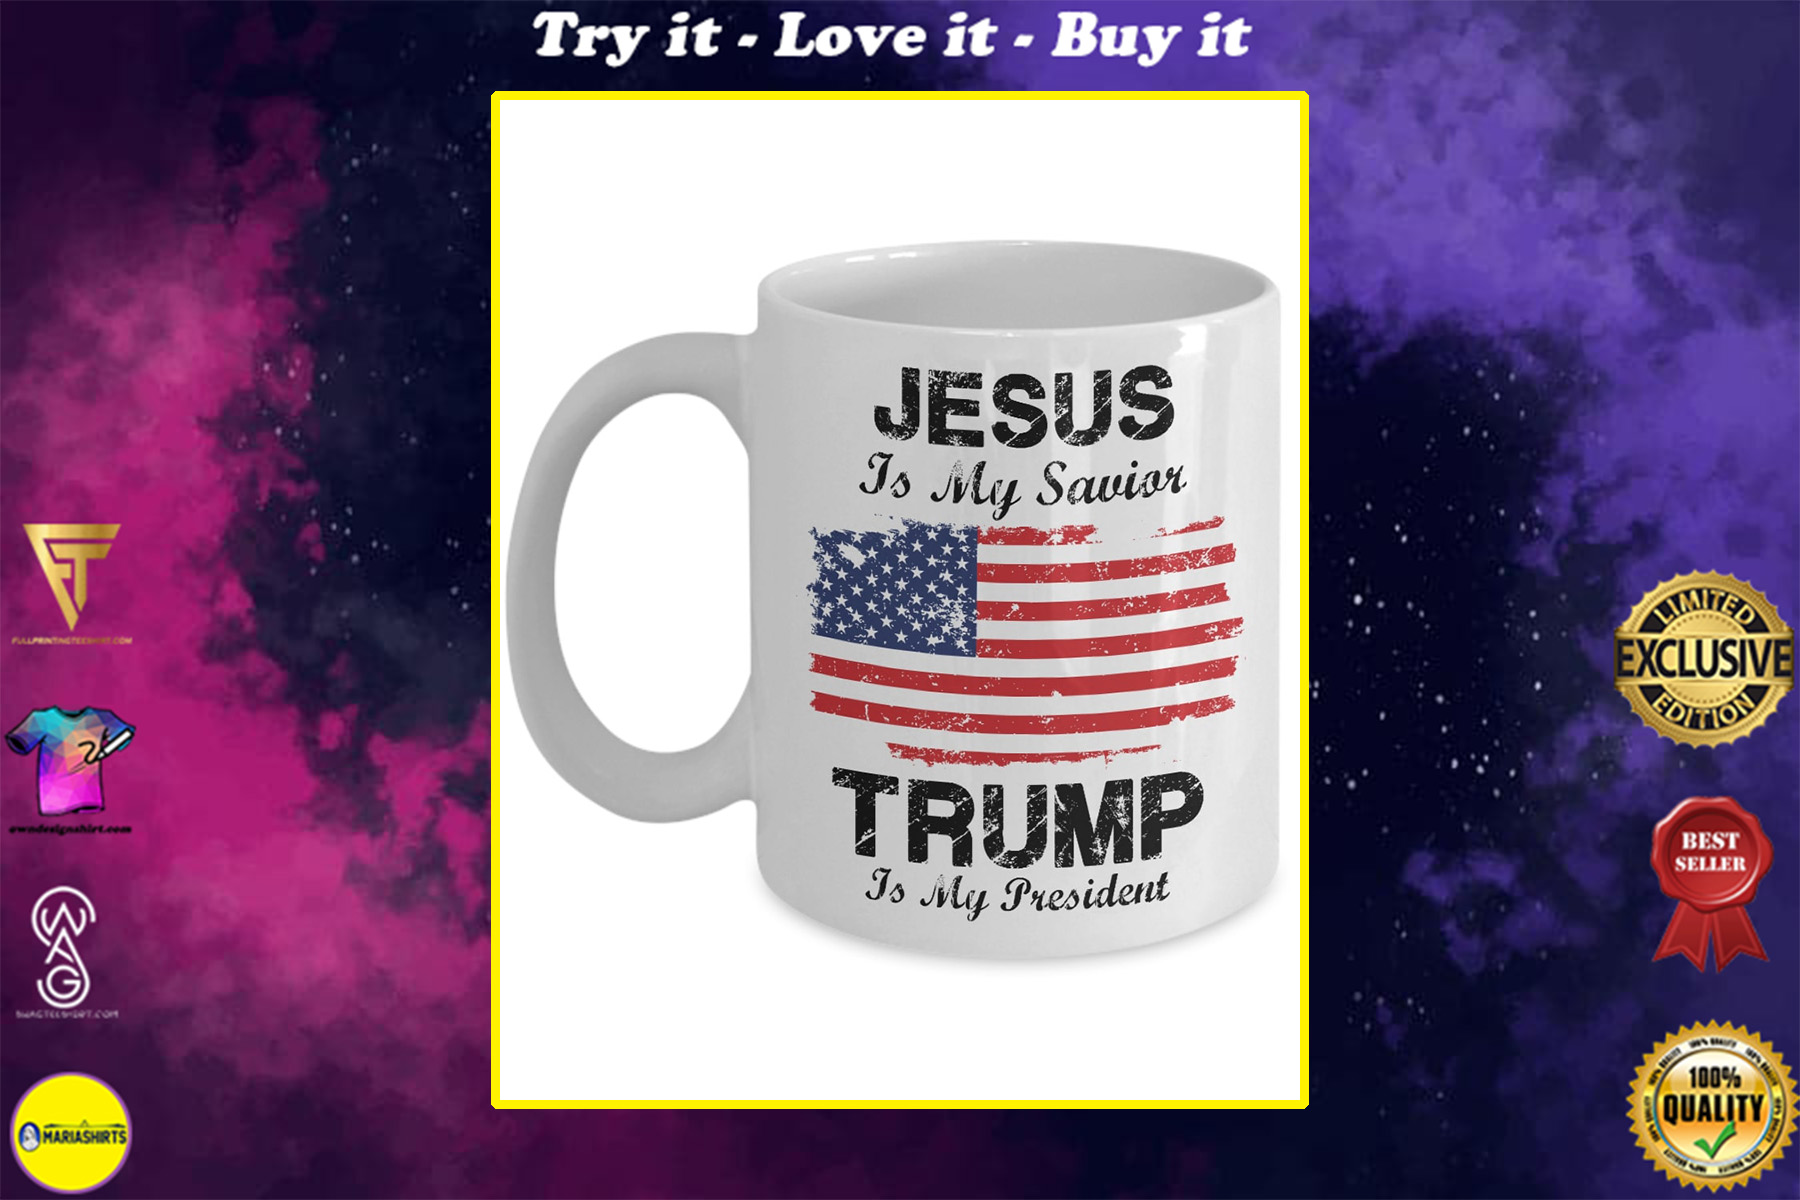 Jesus is my savior make america great again mug